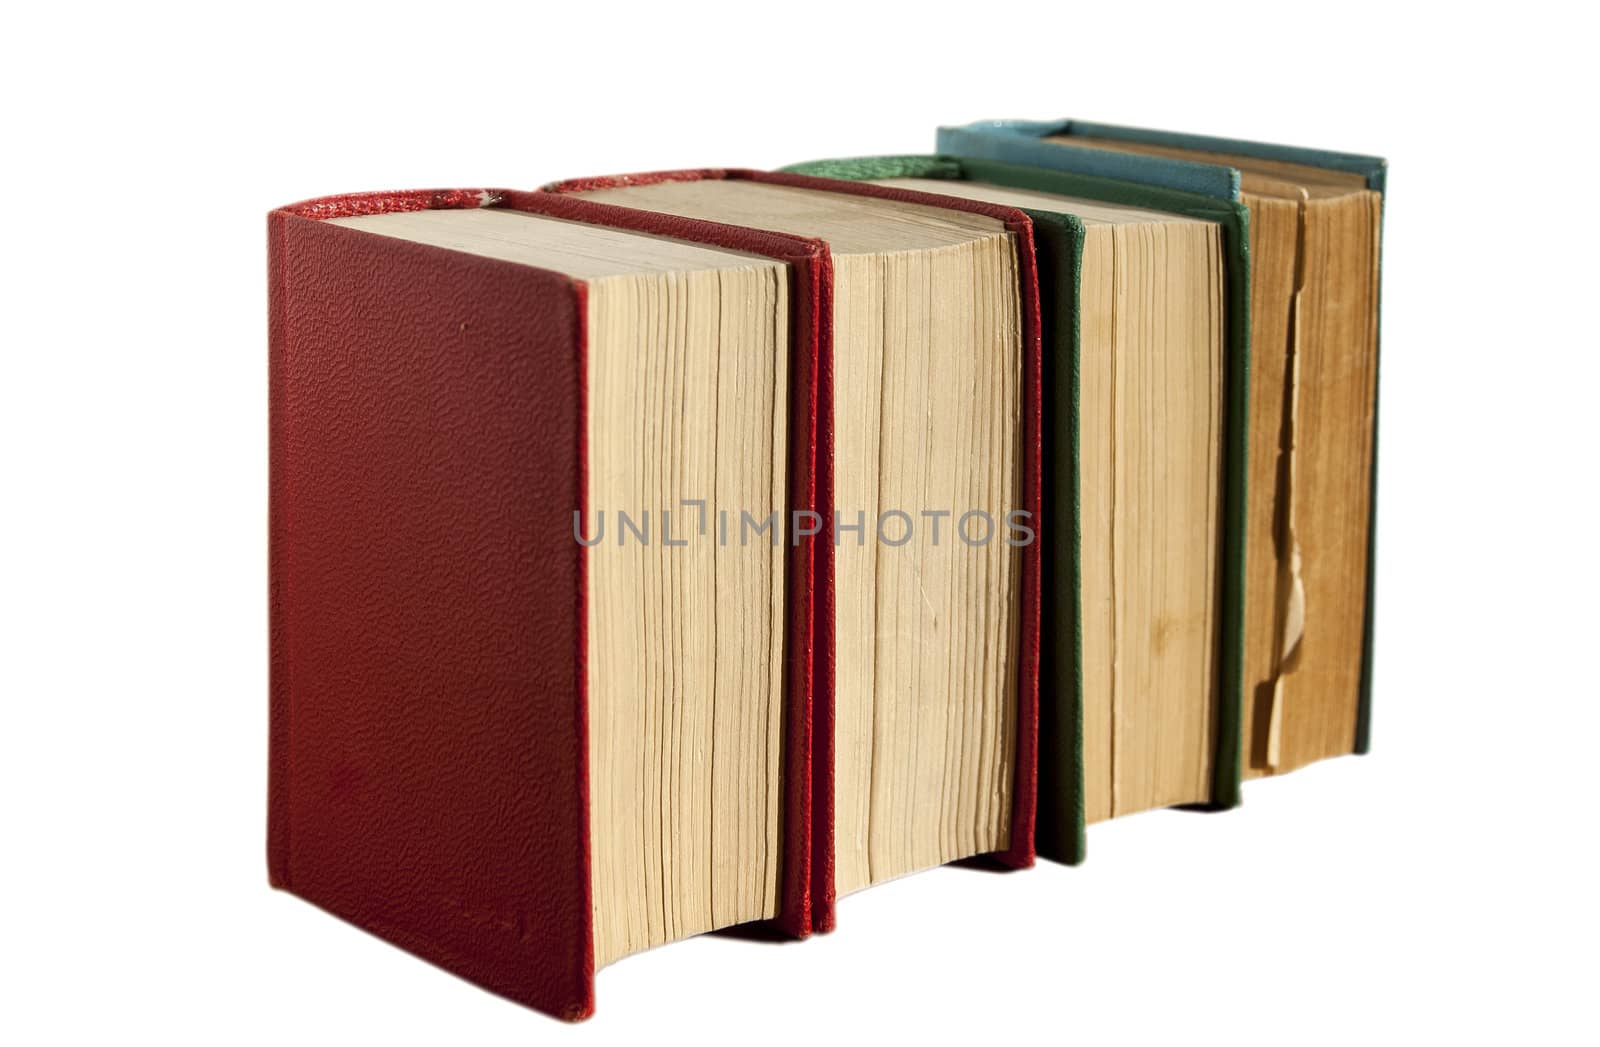 Four old books by varbenov